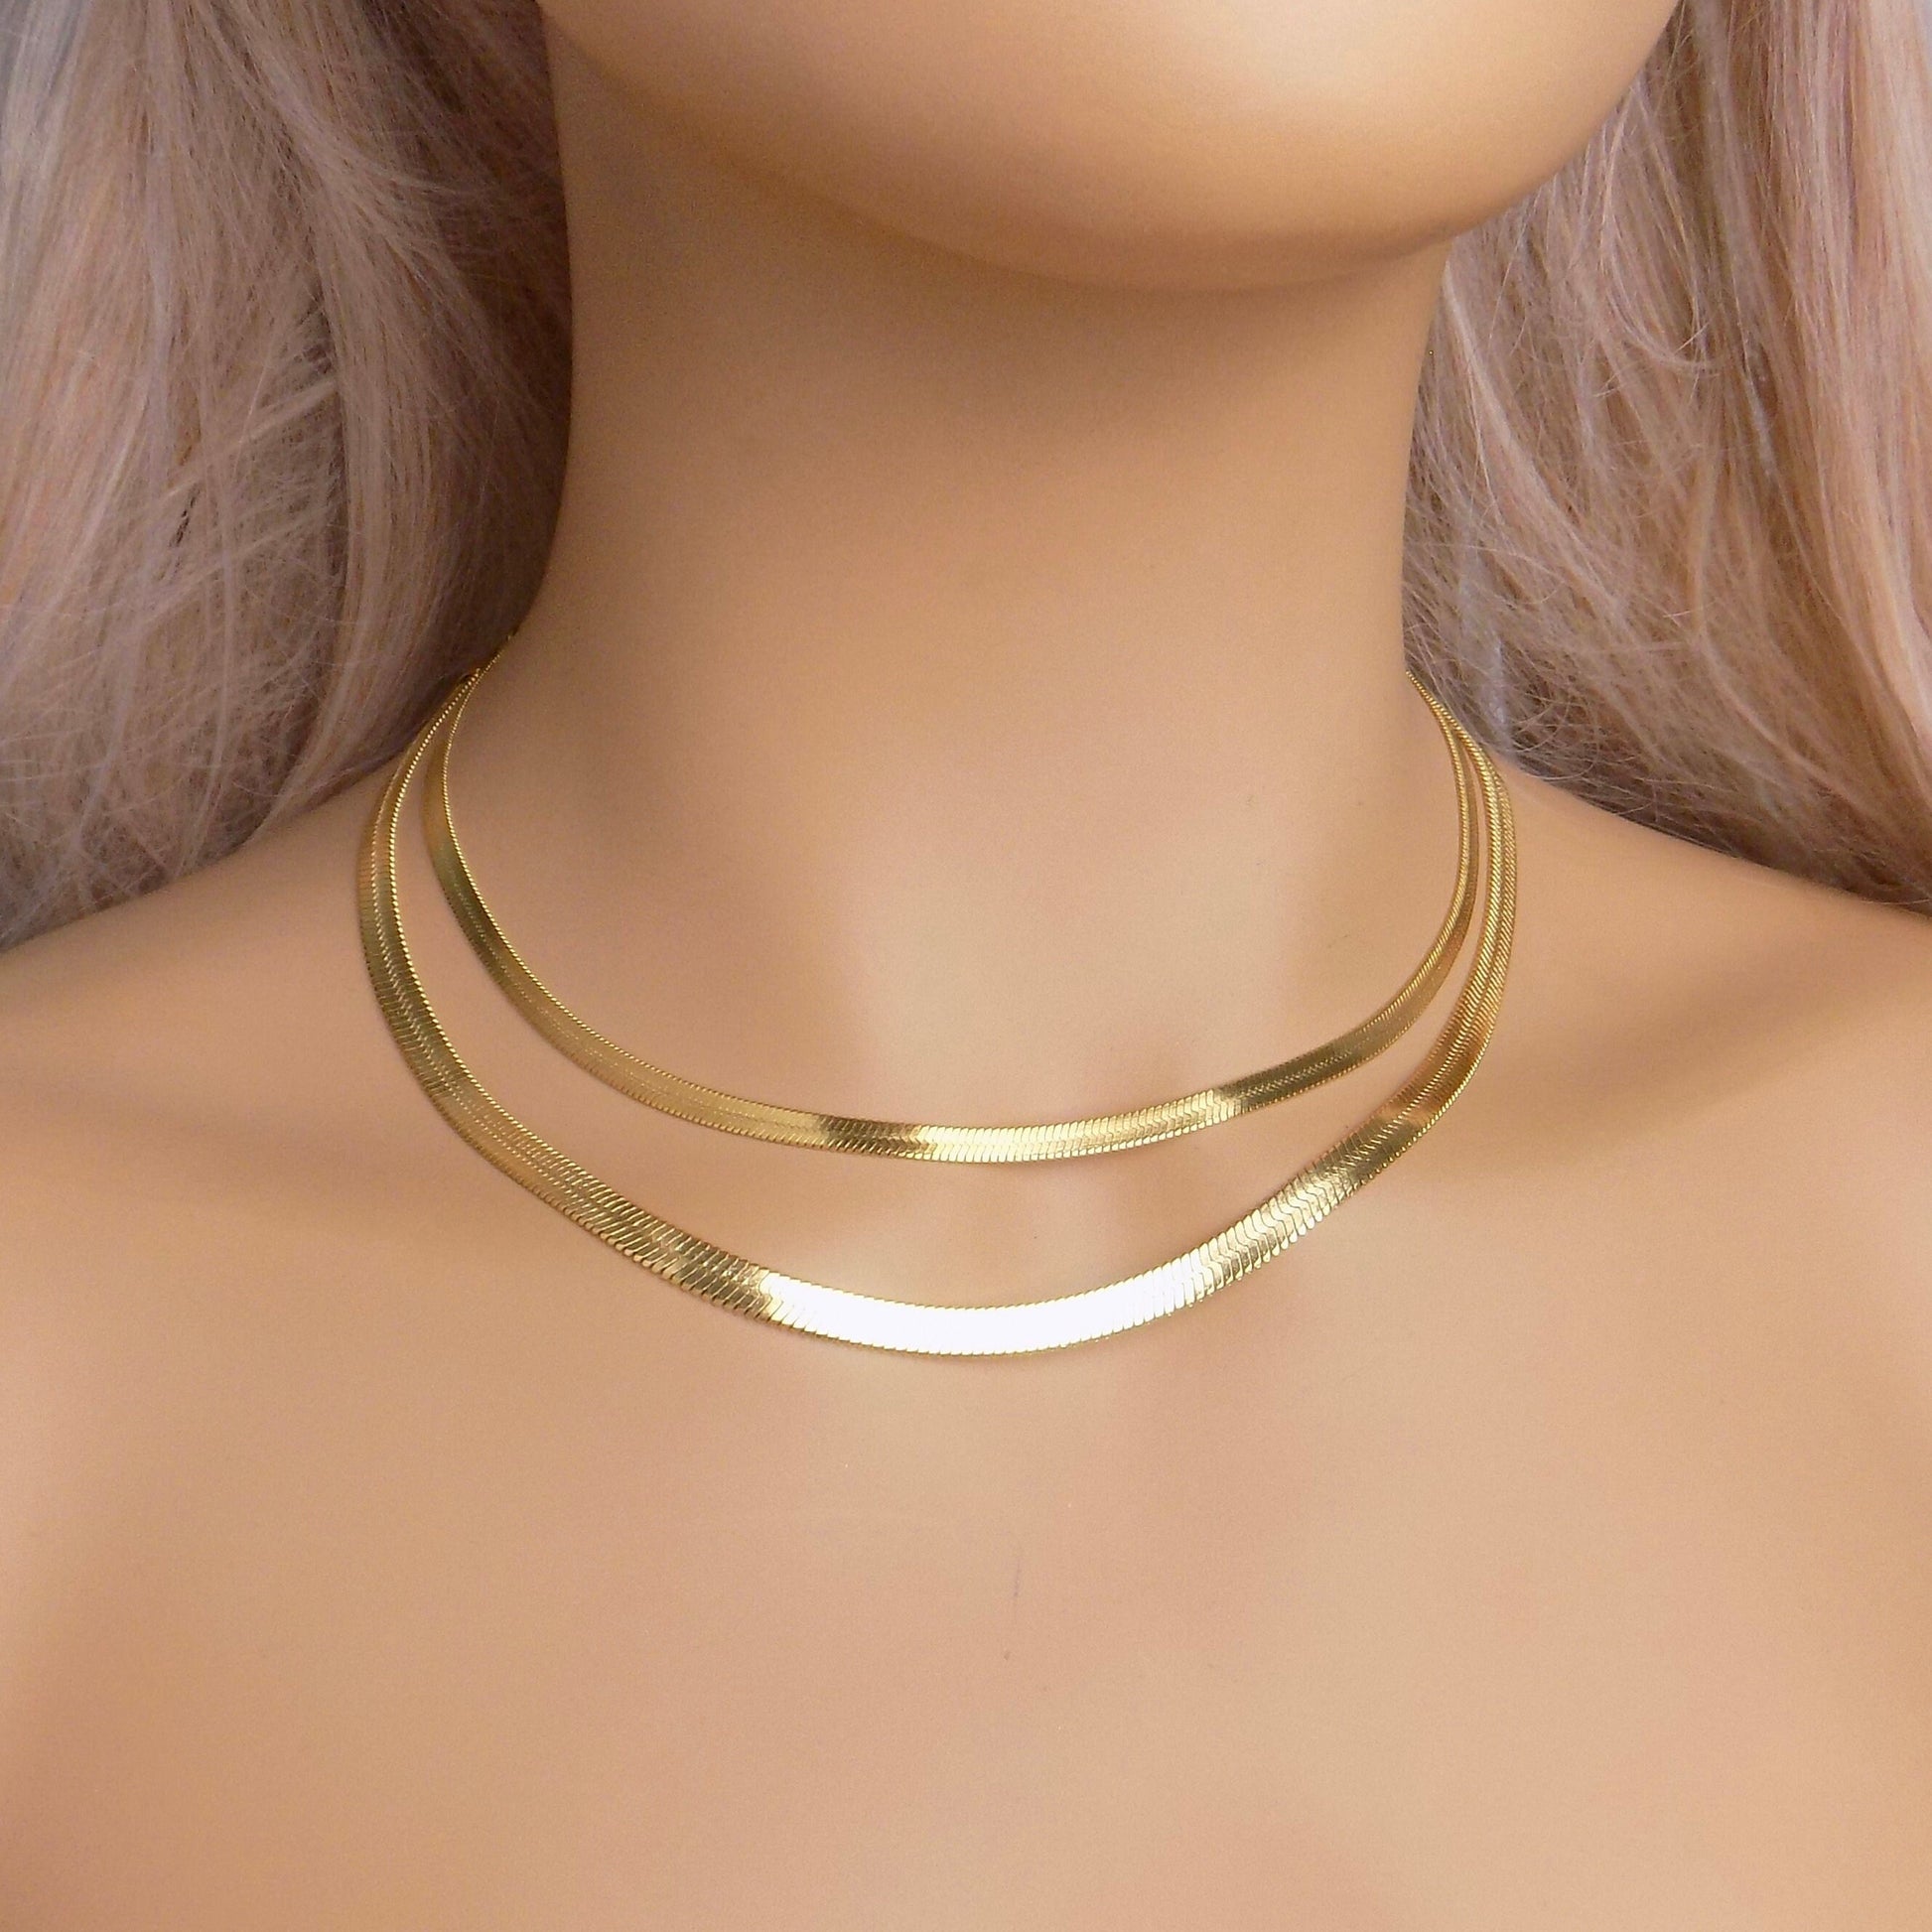 Gold Necklaces For Women, Snake Chain, Herringbone Chain, 18K Gold Stainless Steel, Modern Trendy, M7-90